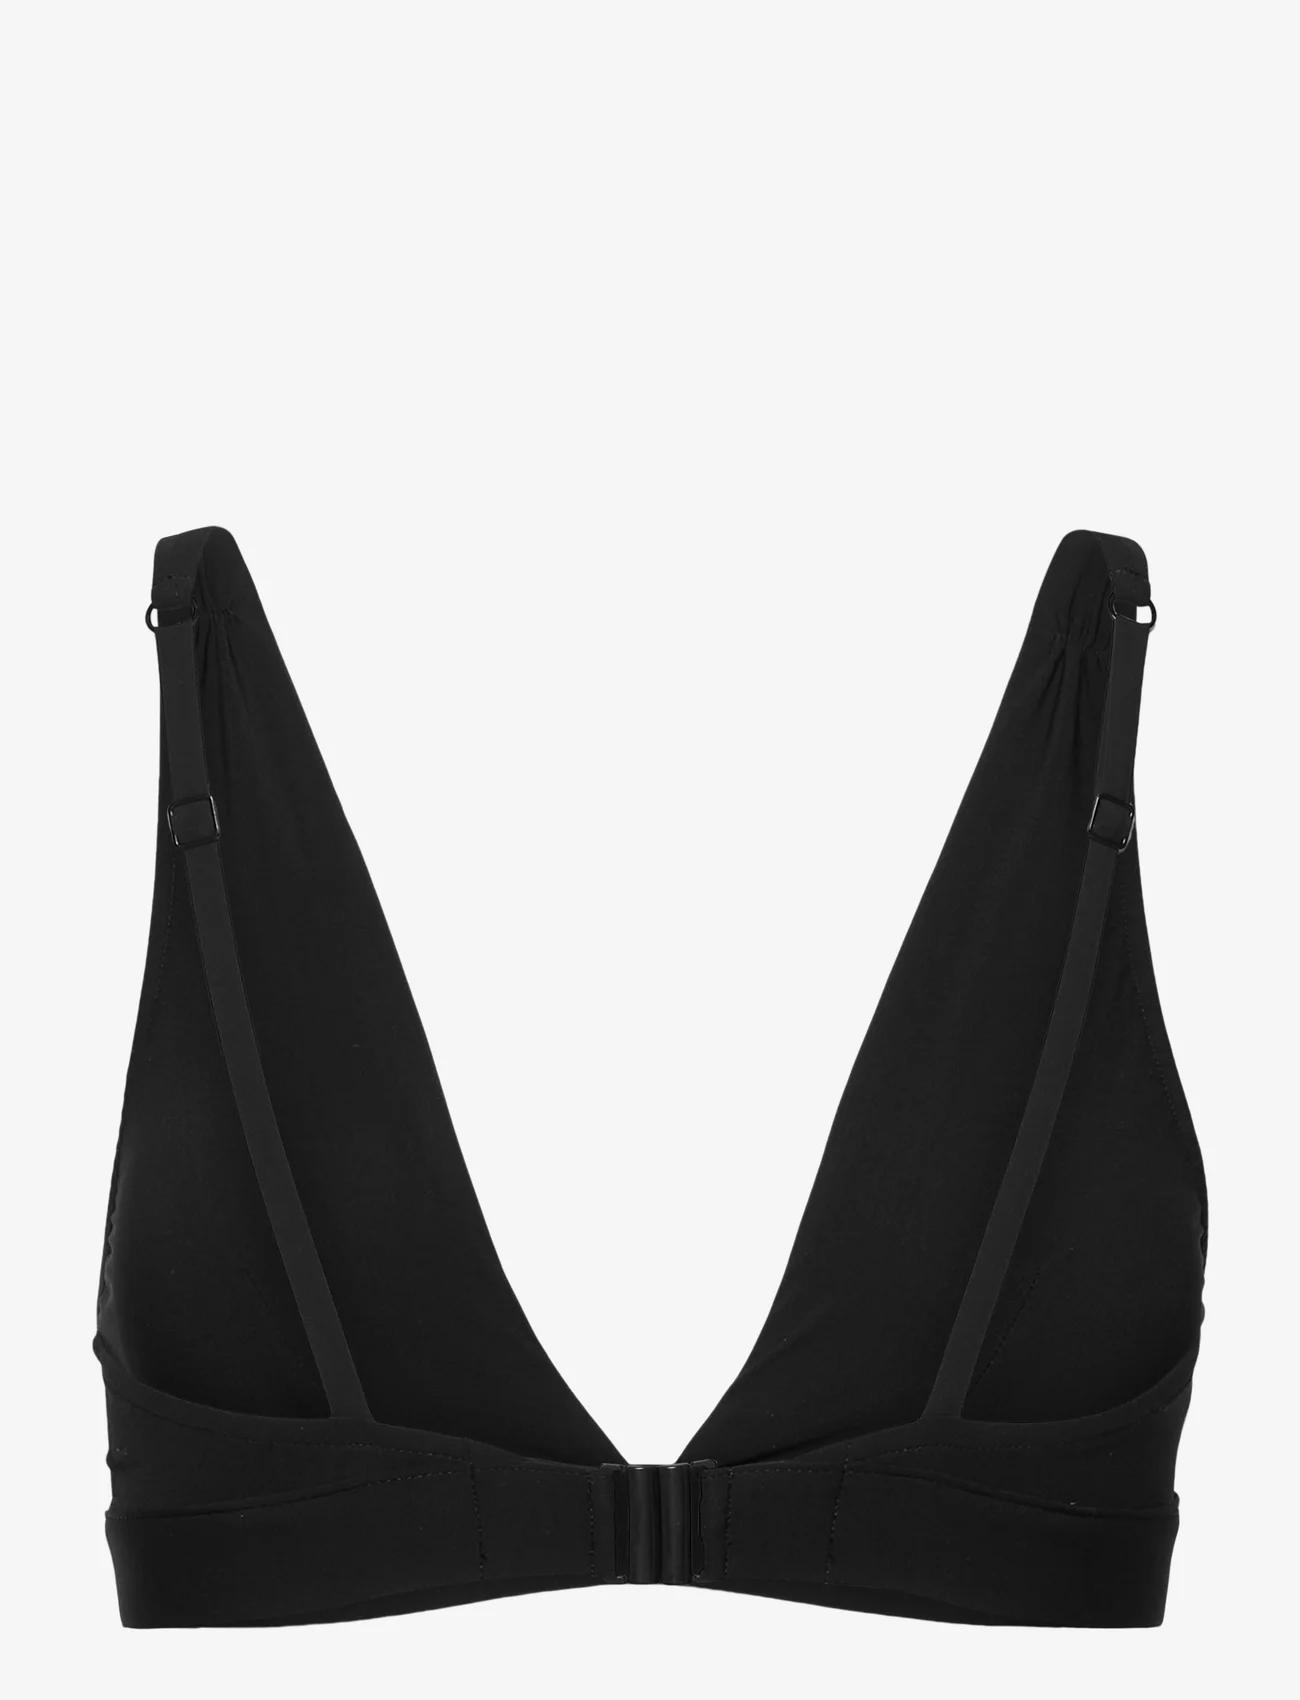 CHANTELLE - Inspire Wirefree plunge bra - trekant-bikinis - black - 1